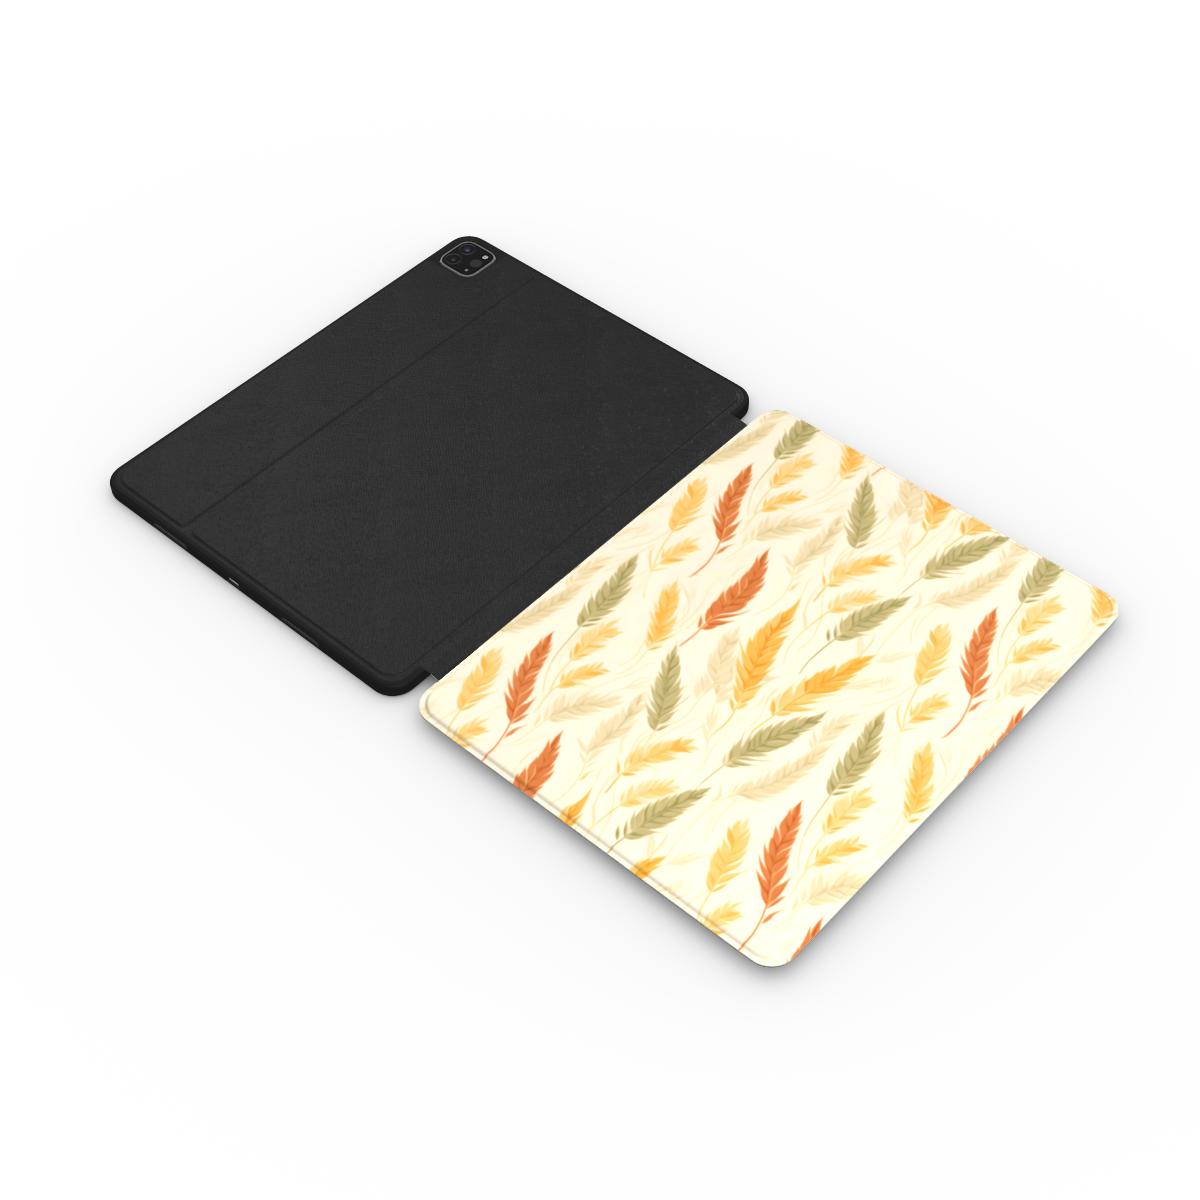 Feather-Woven Wheat Fields - iPad Case